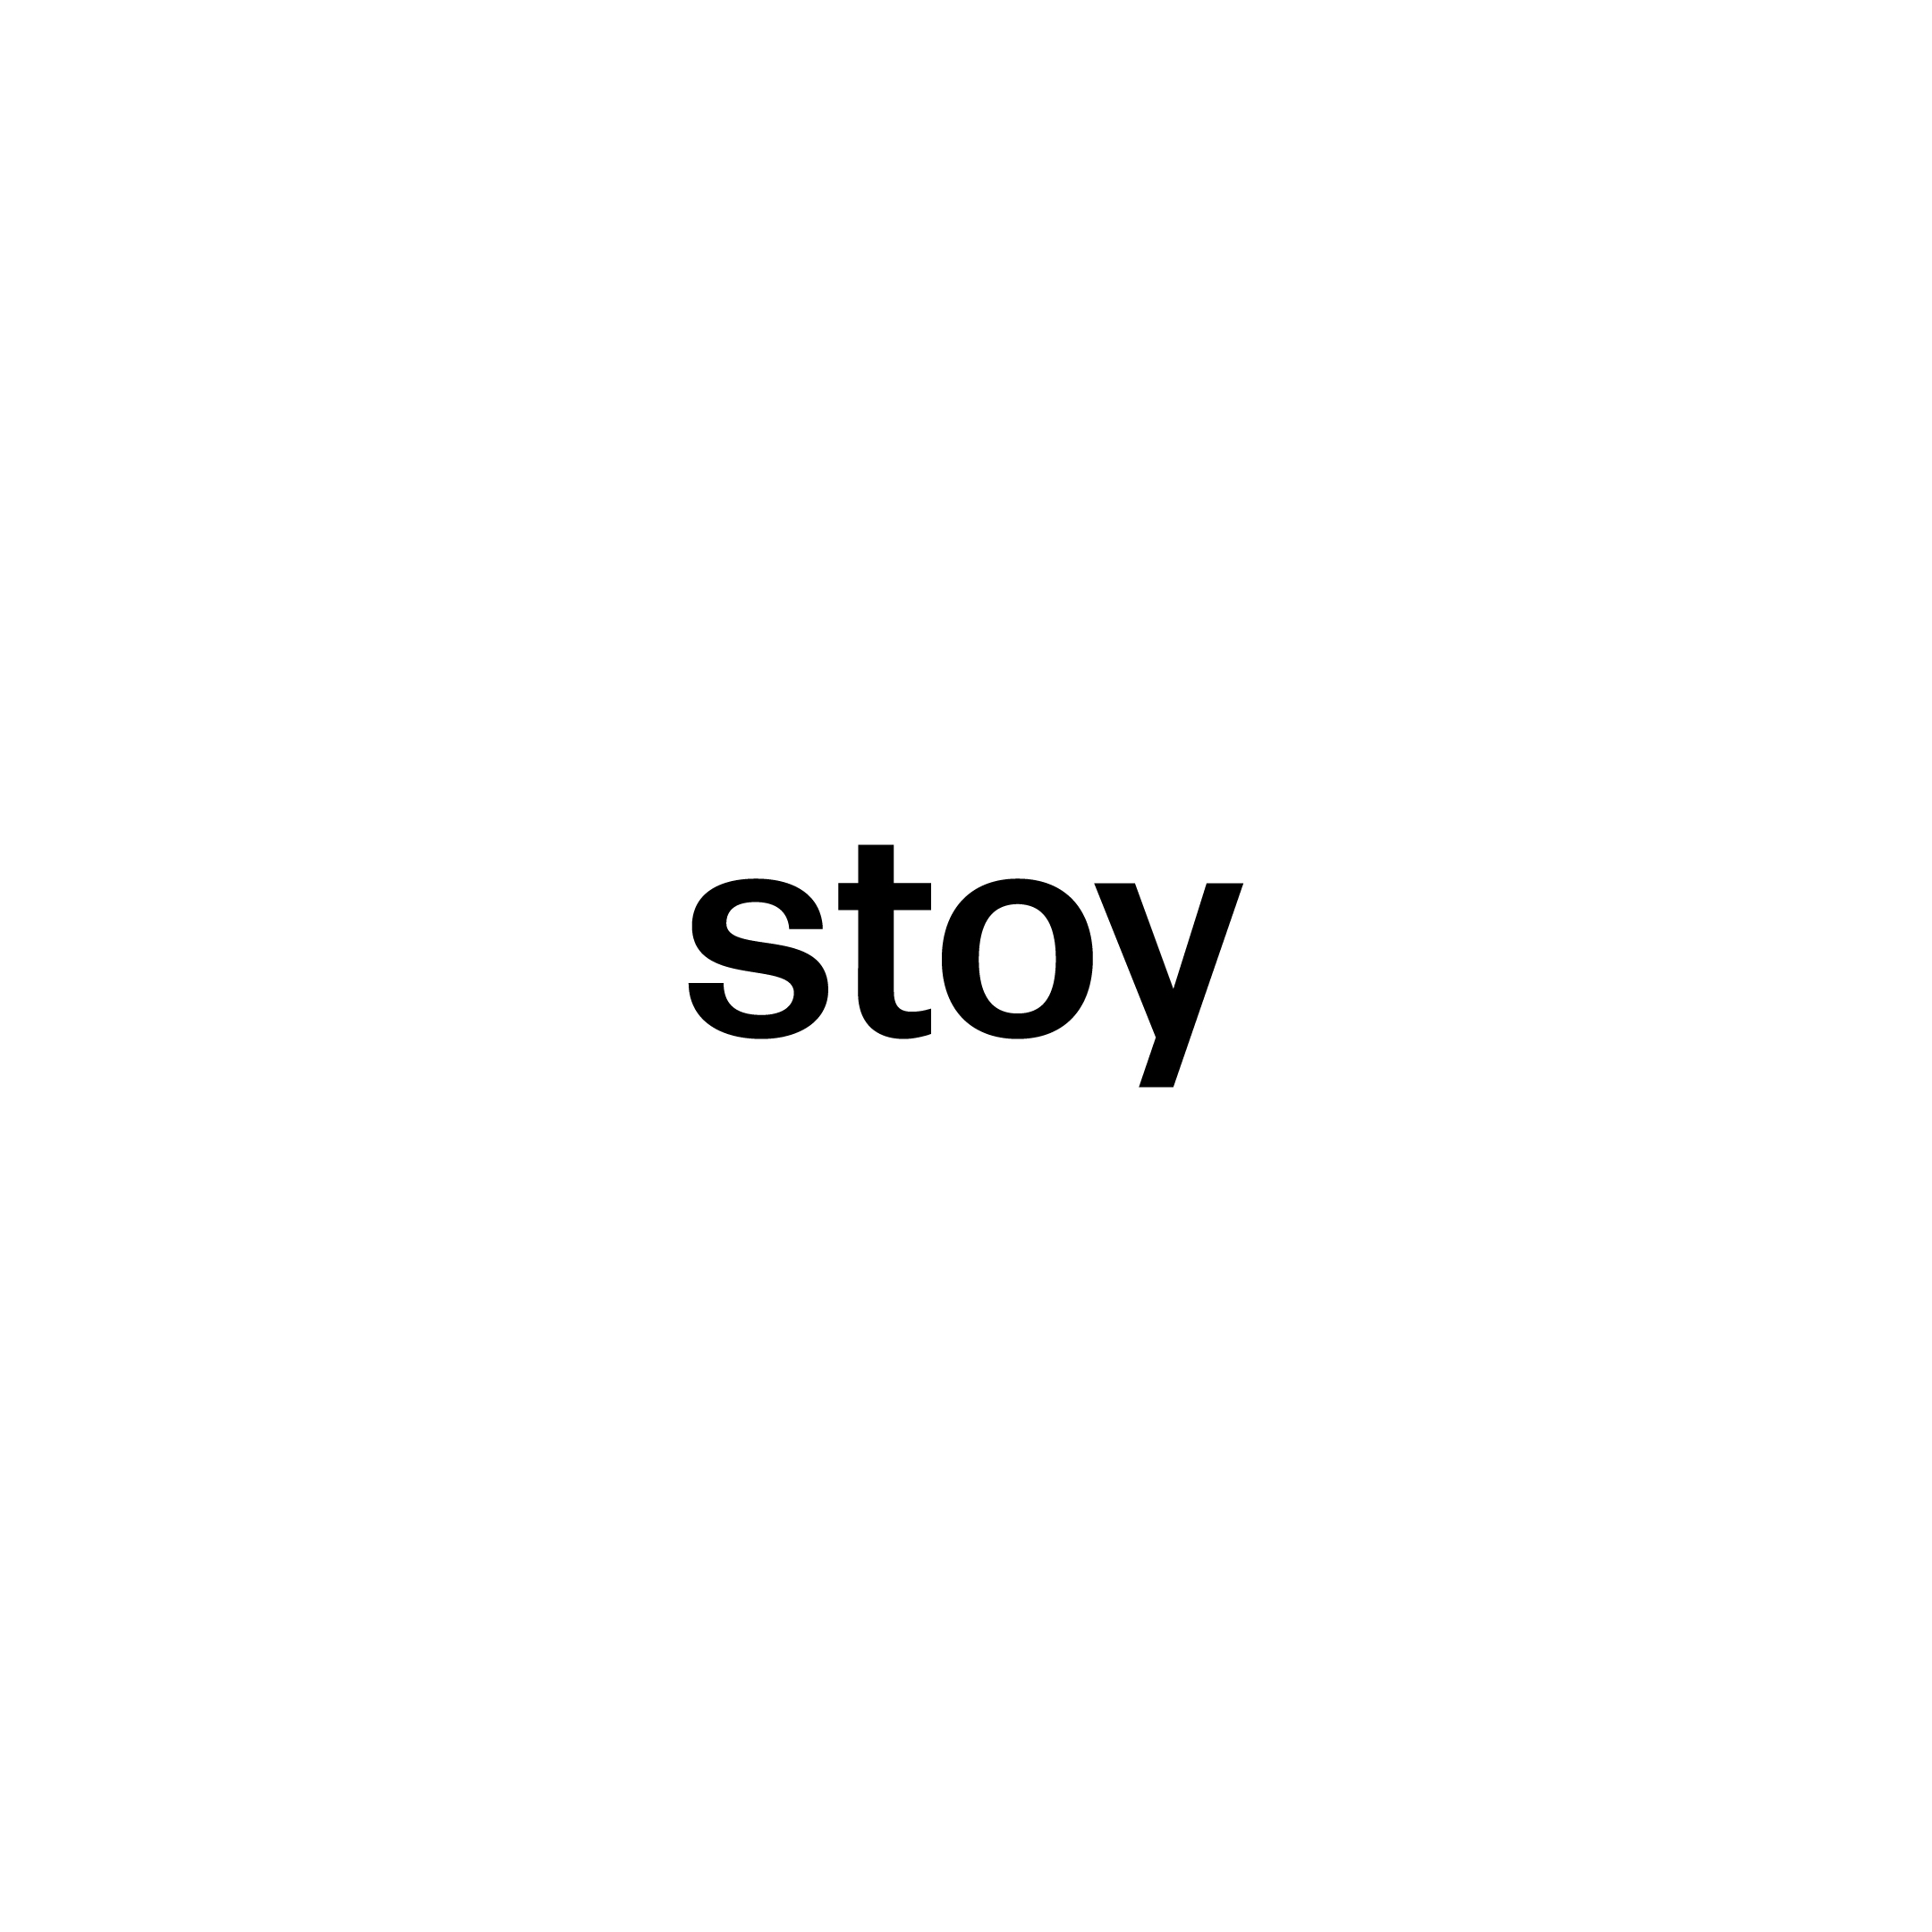 stoy_Id_1